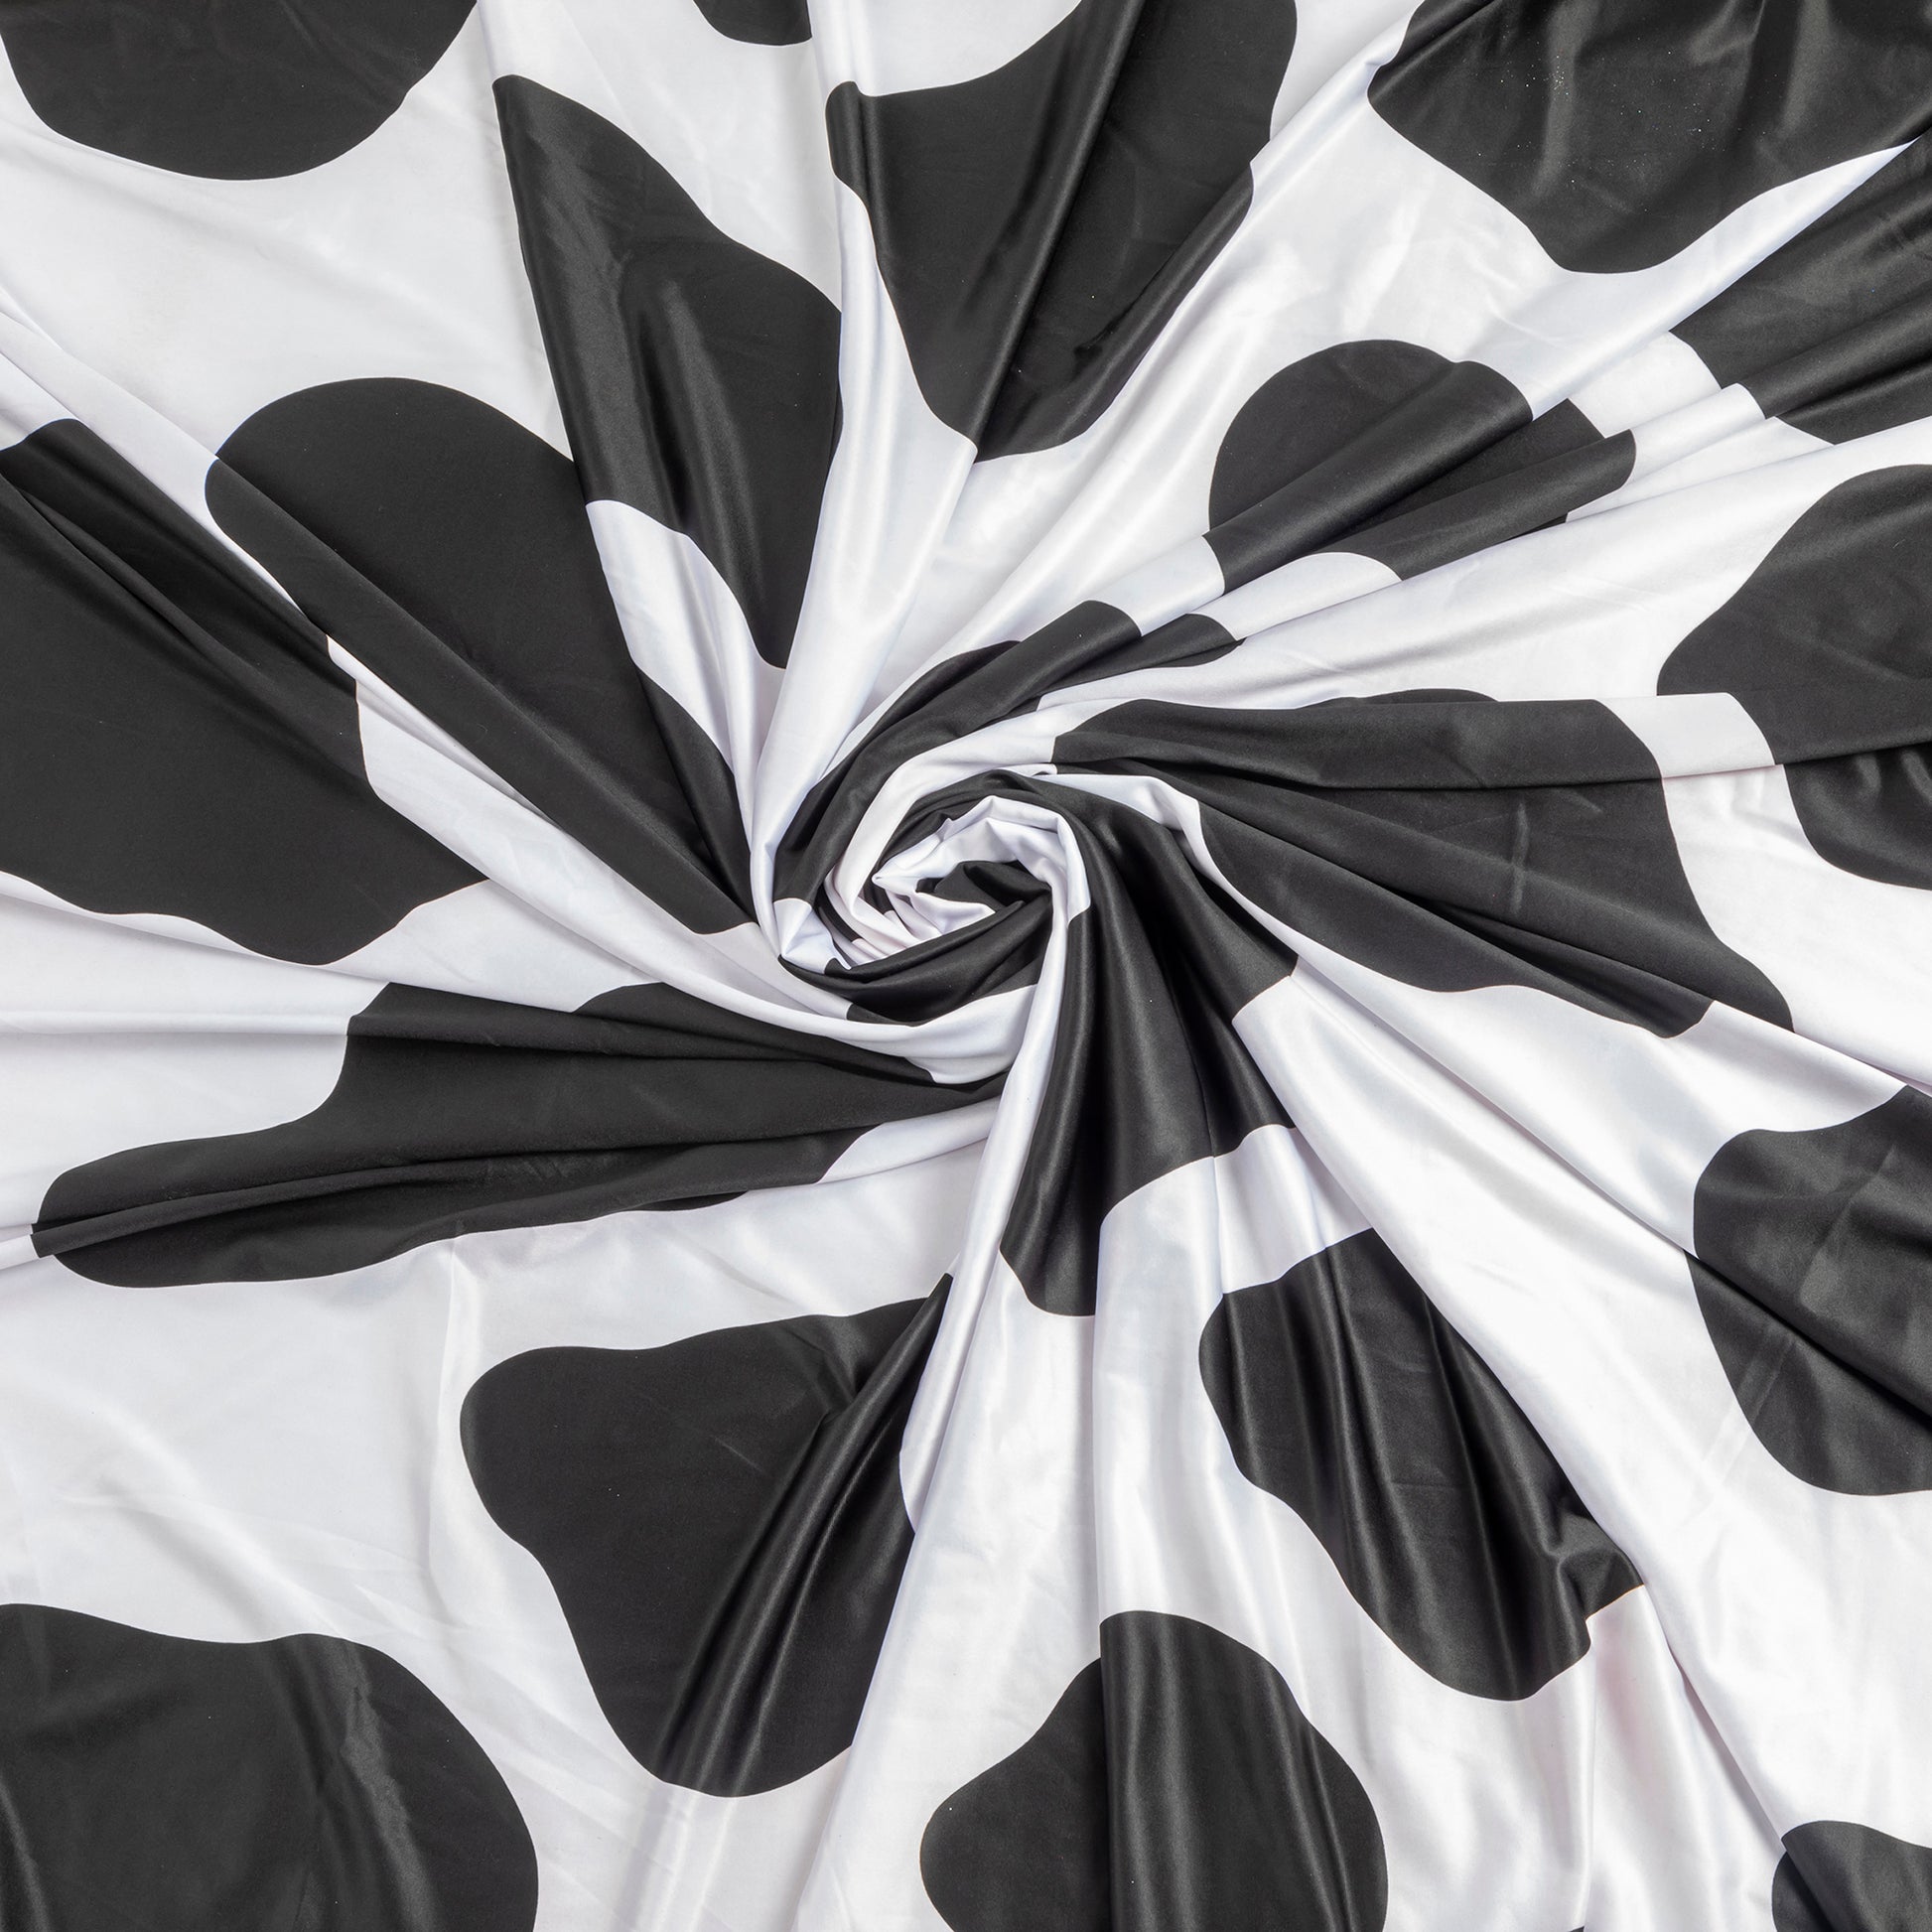 Cow Print Plastic Tablecloth Roll